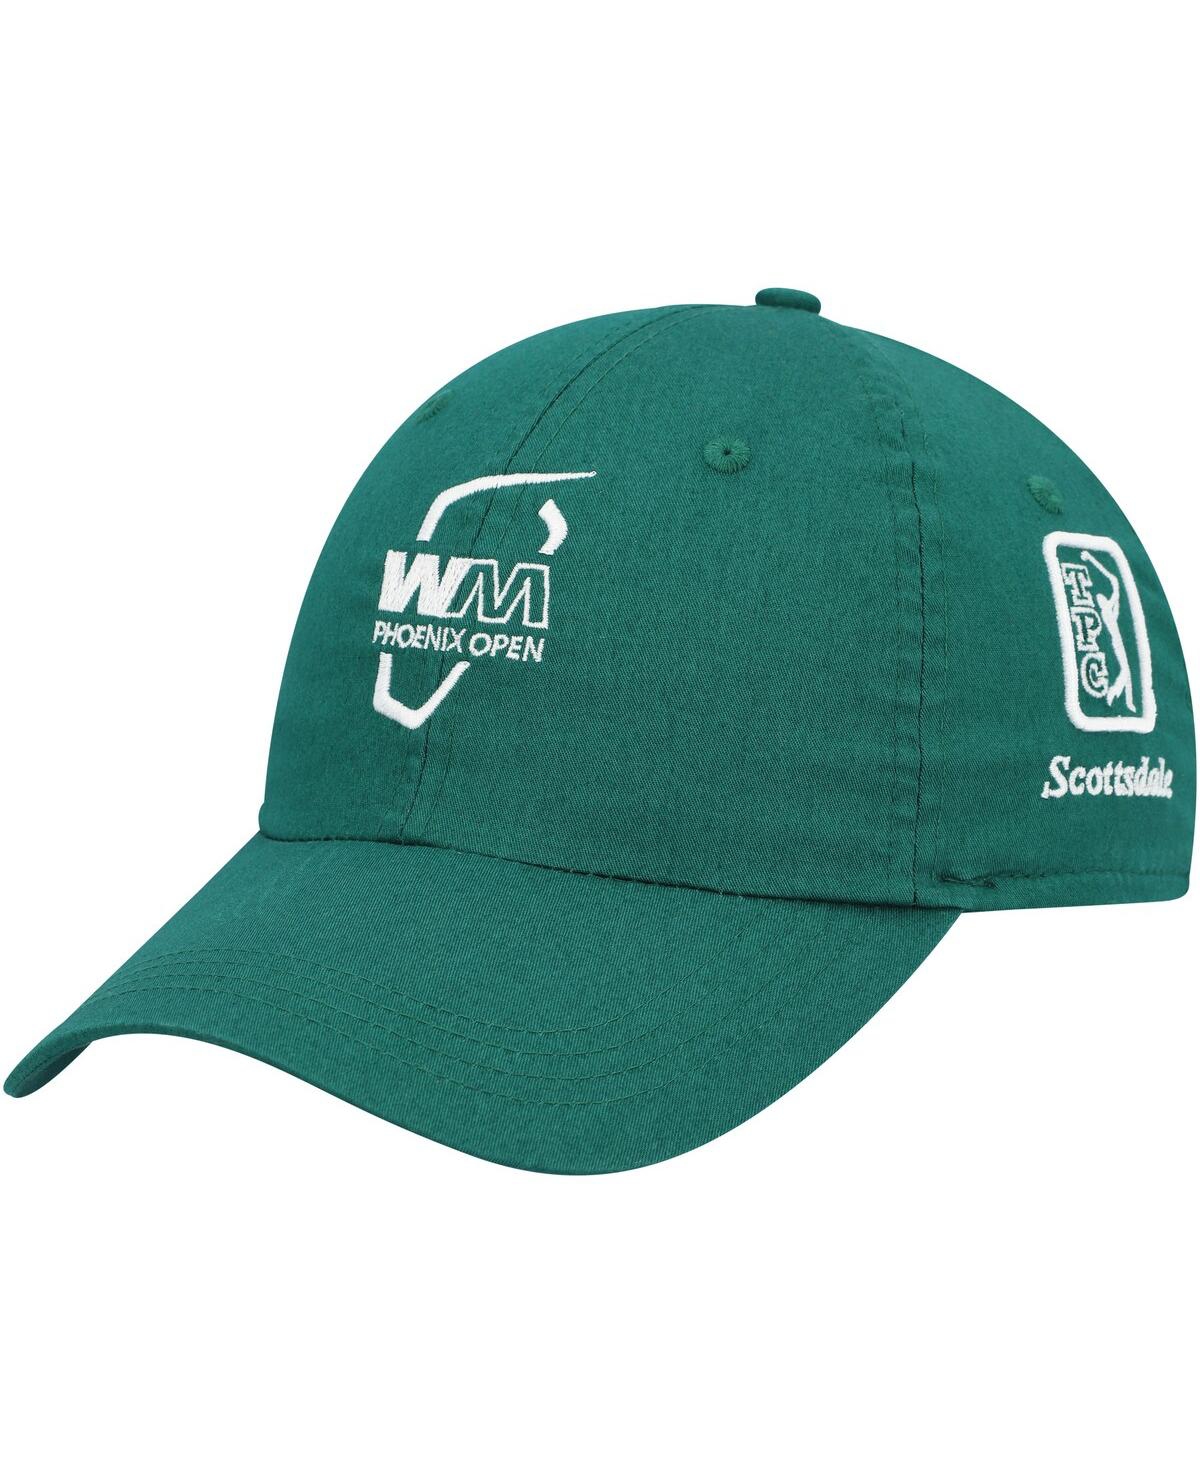 Men's Ahead Green Wm Phoenix Open Shawmut Adjustable Hat - Green